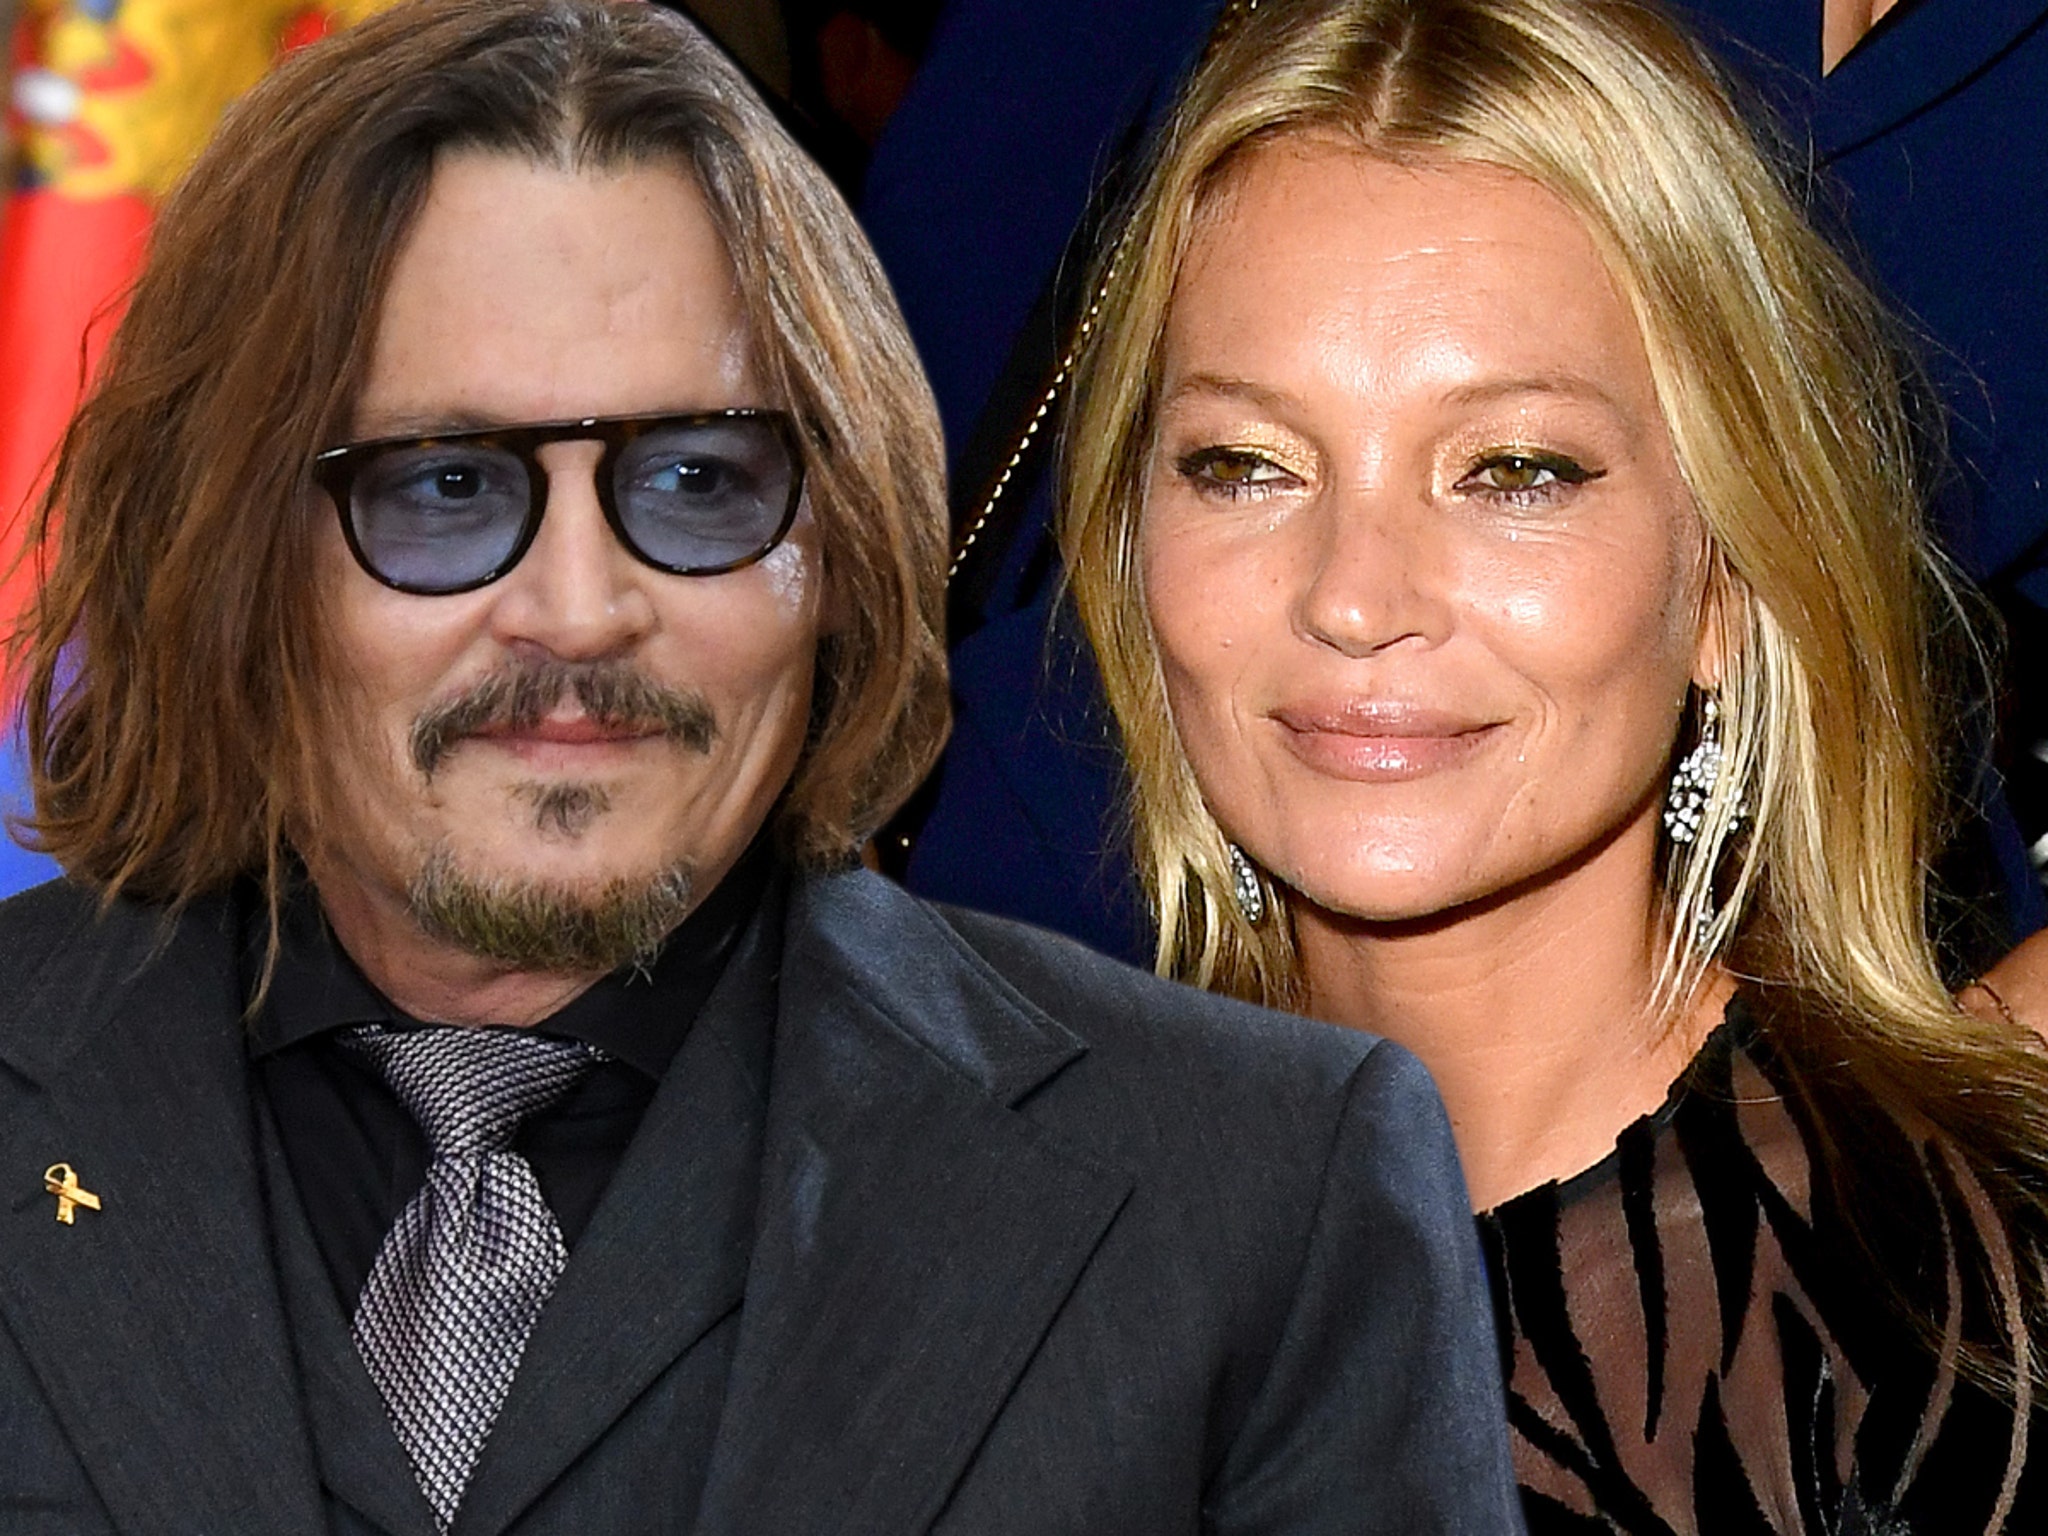 magasin reservation Rejsende købmand Johnny Depp and Kate Moss Dating Talk Swirls After She Testifies in Court